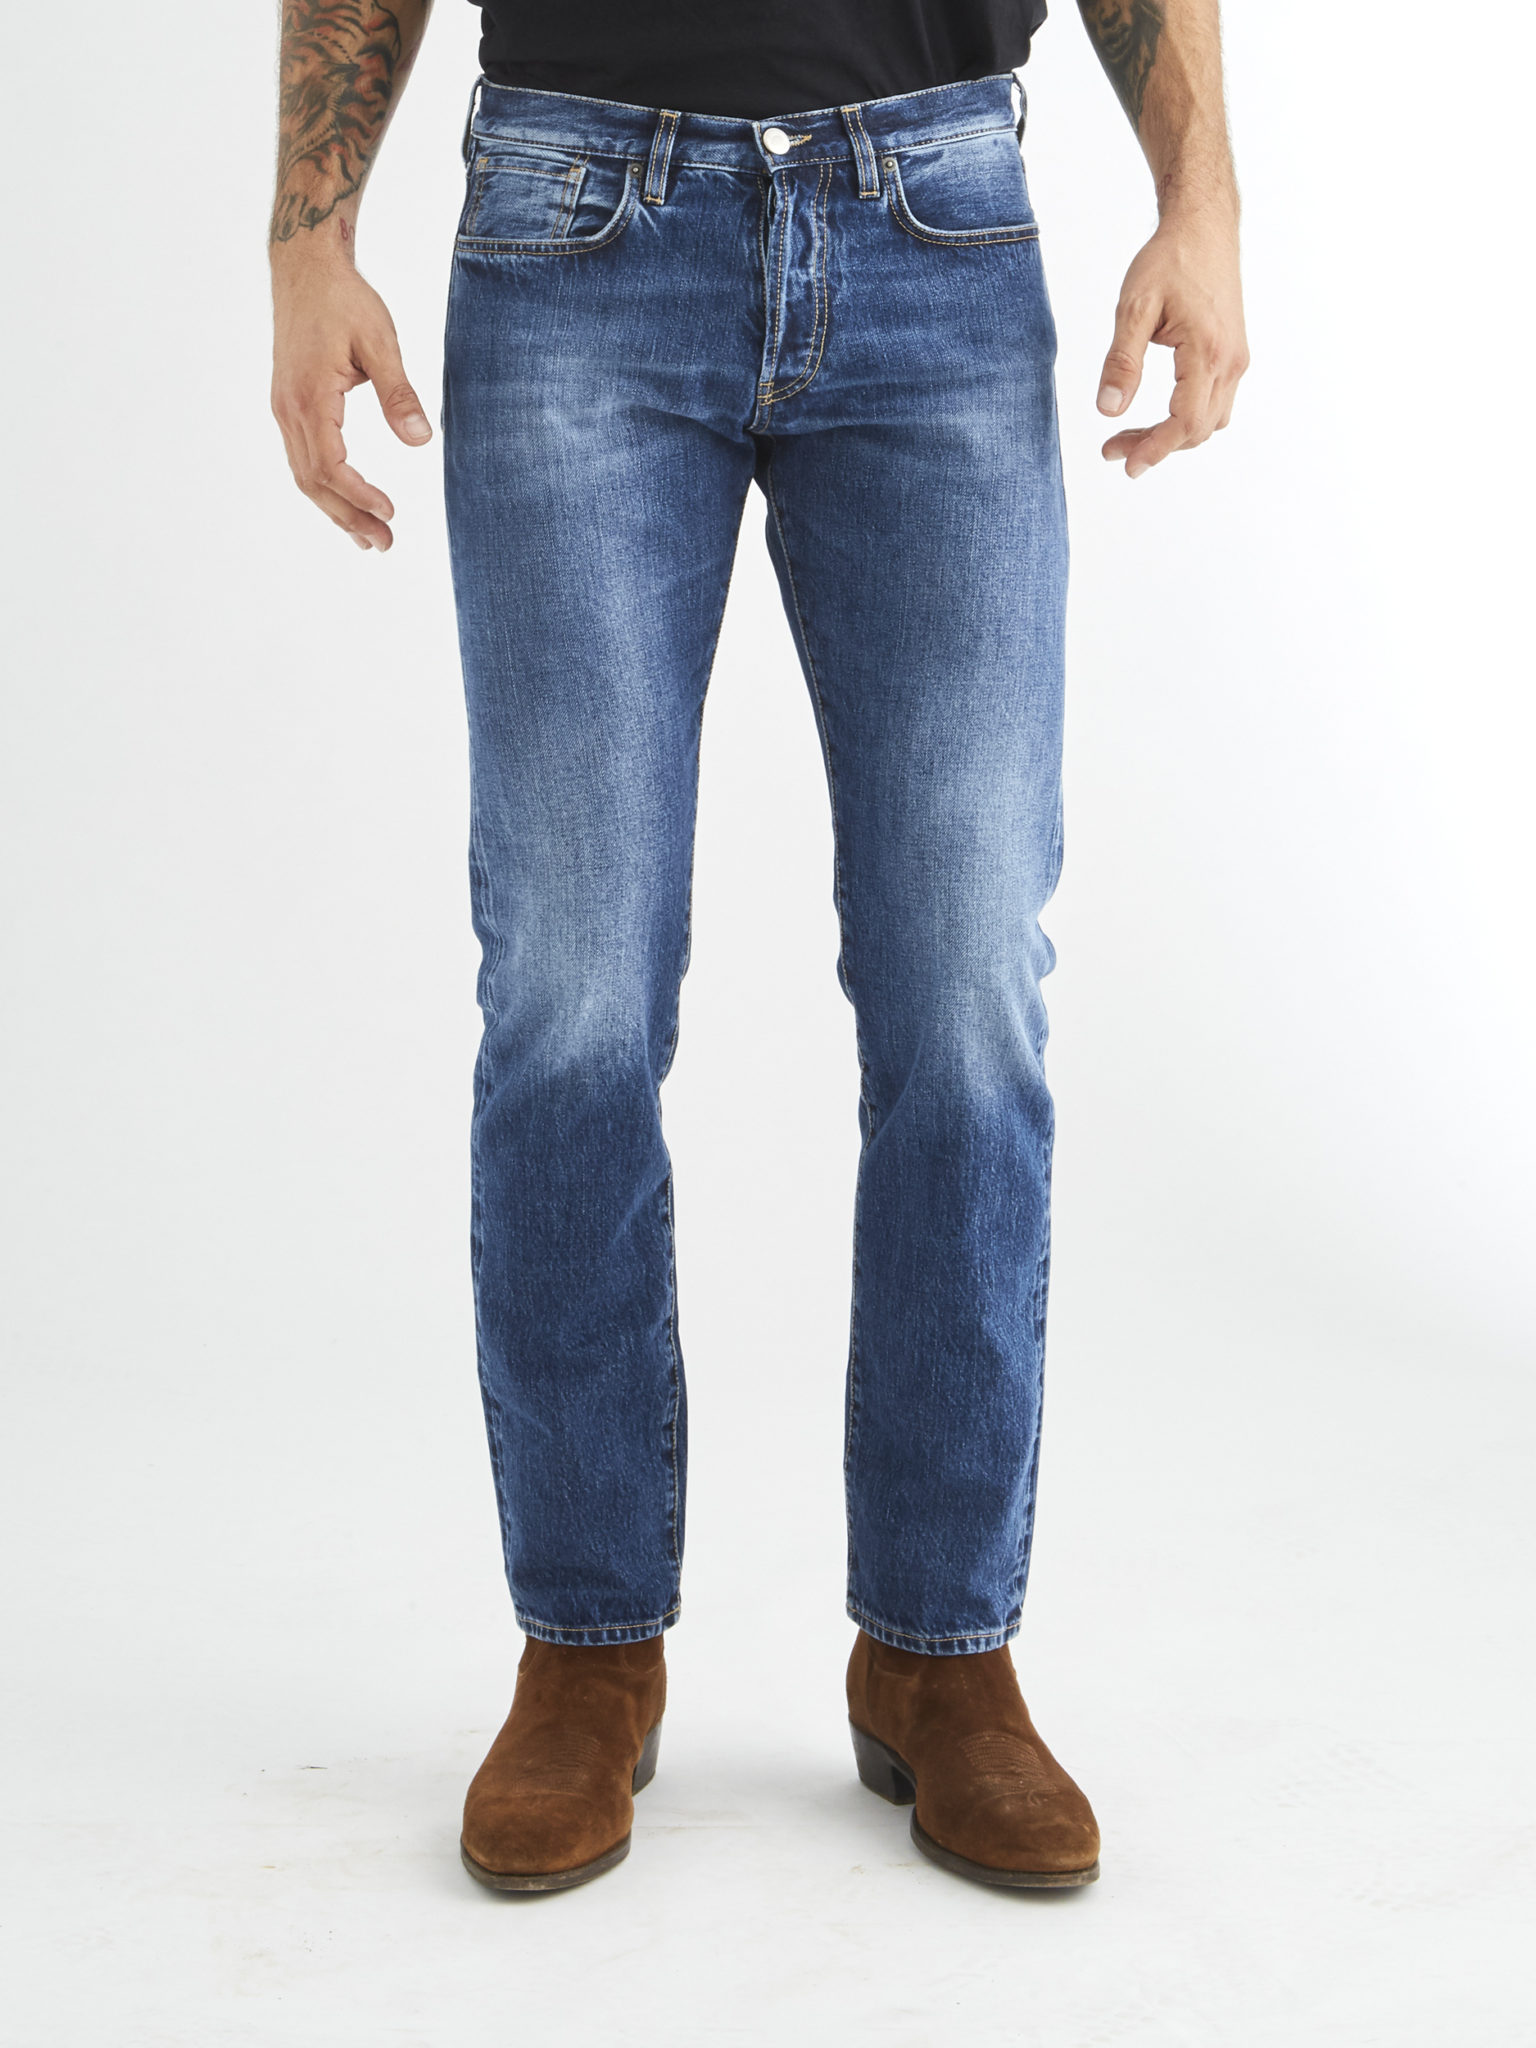 Bandito Blue Medium Wash Slim Fit Selvedge Jeans - Barbanera